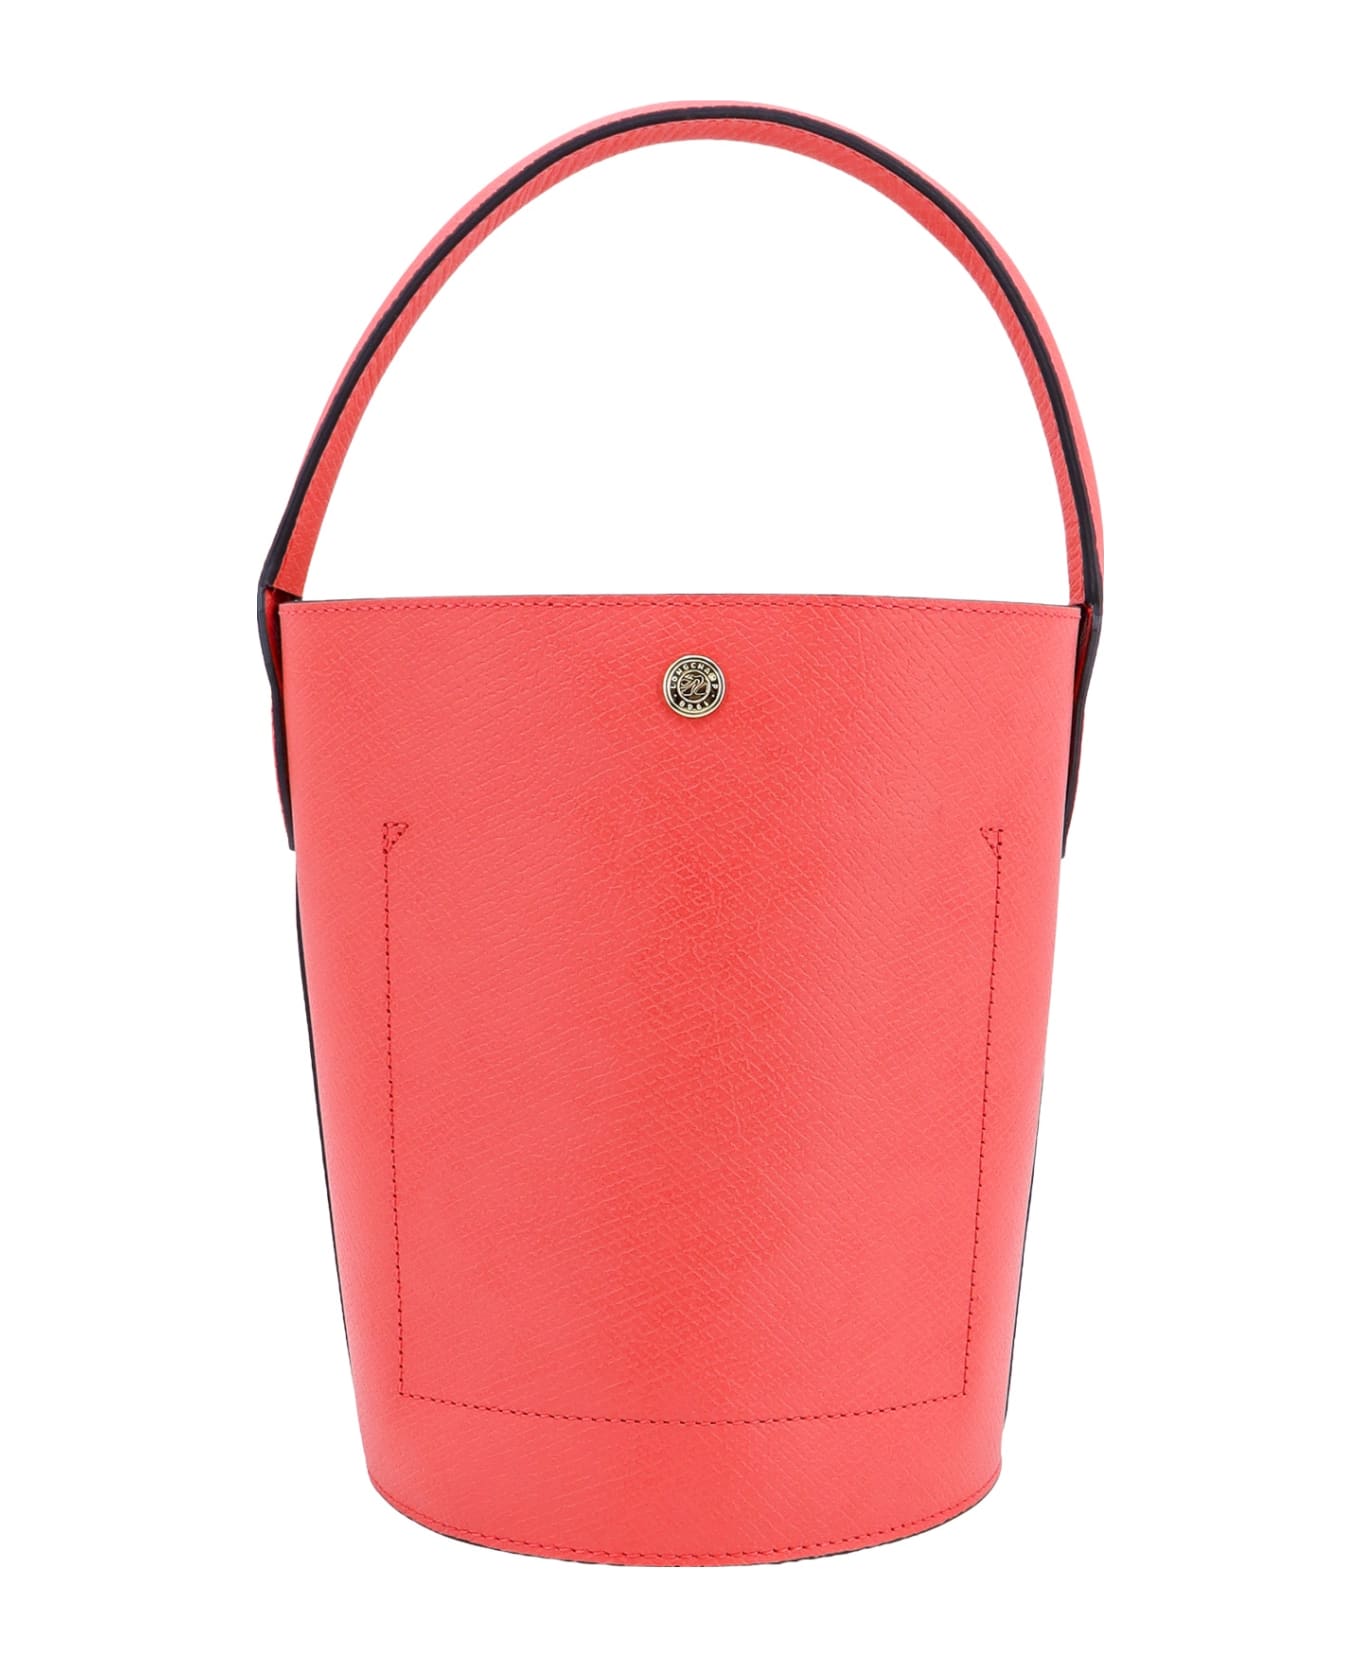 Longchamp Re Bucket Bag - Fragola トートバッグ